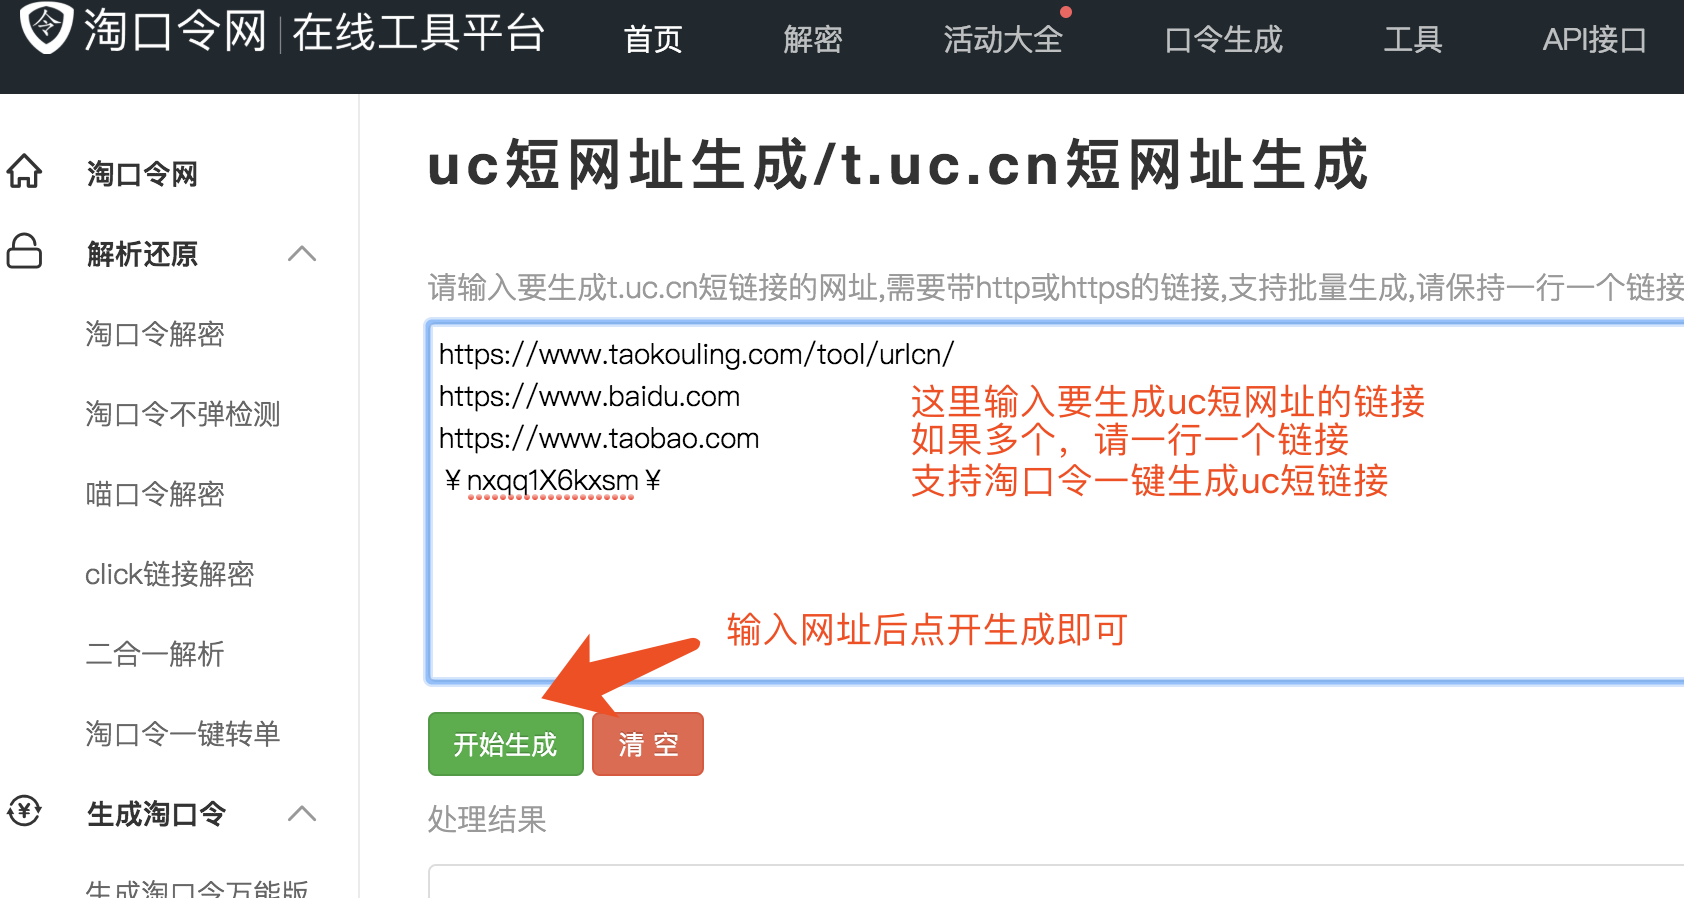 uc搜索网址总是跳出网盘会员、uc搜索网址总是跳出网盘会员界面